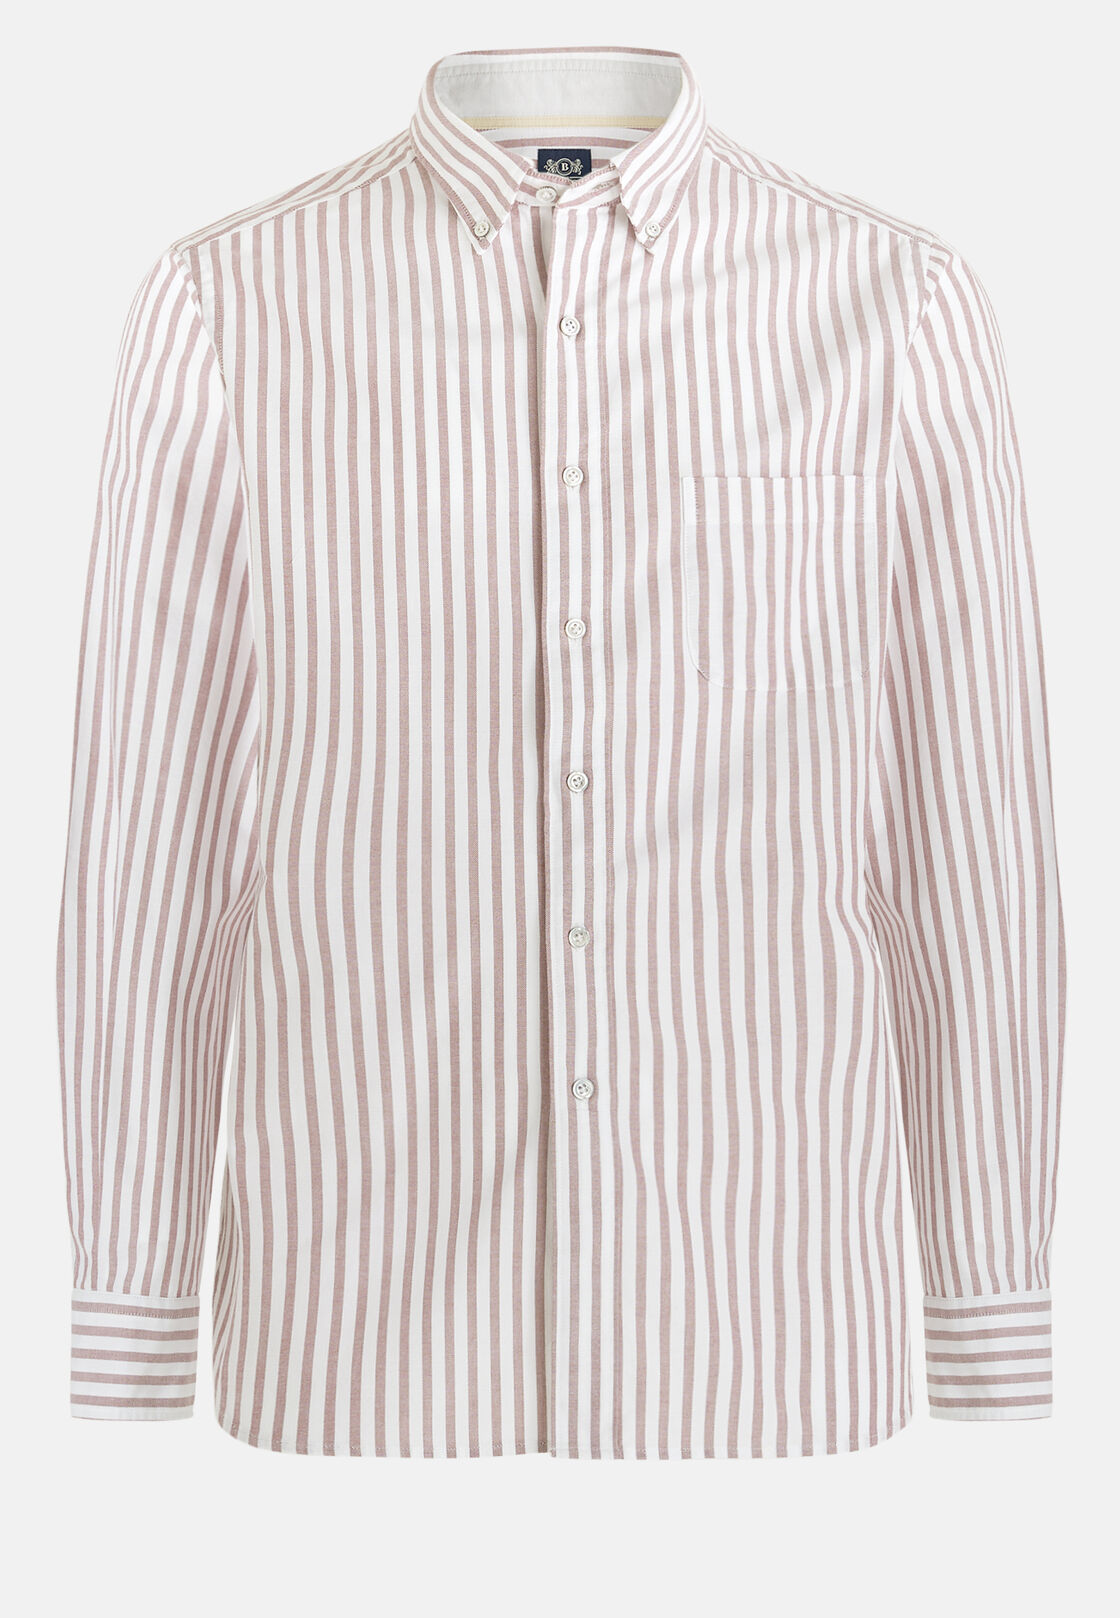 Regular fit burgundy striped cotton shirt, Burgundy, hi-res